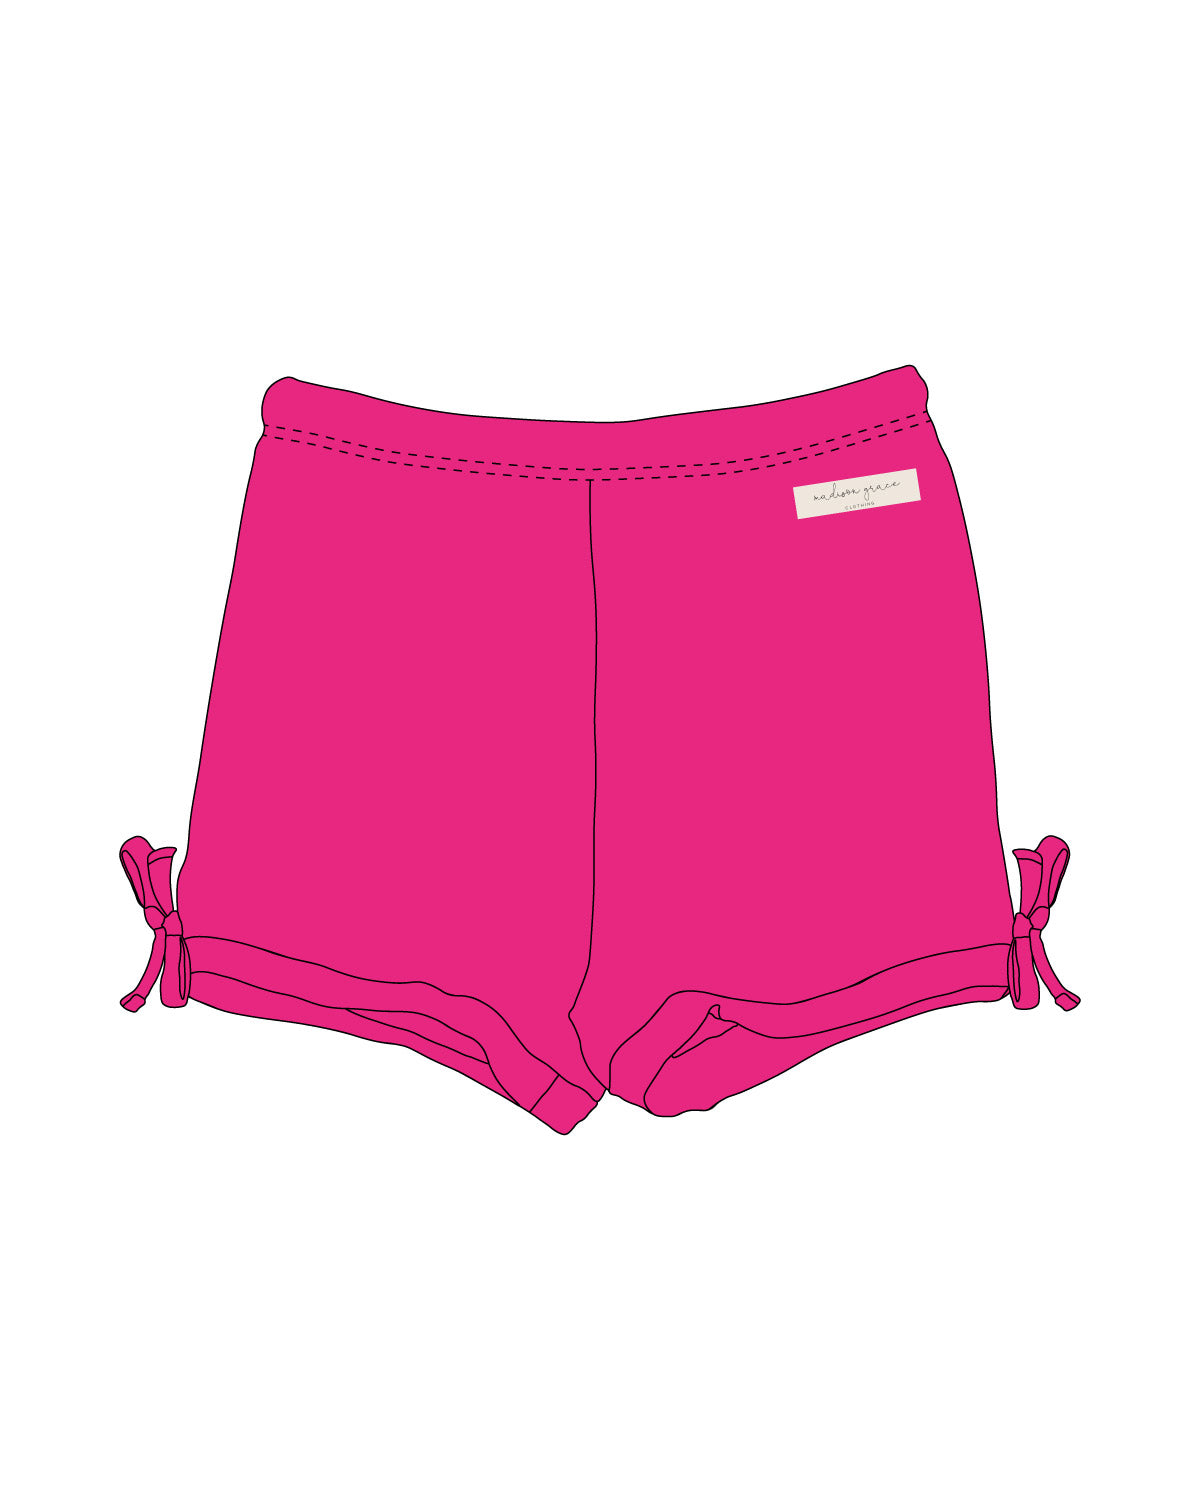 Simple Shorties - Hot Pink - Love Millie Clothing